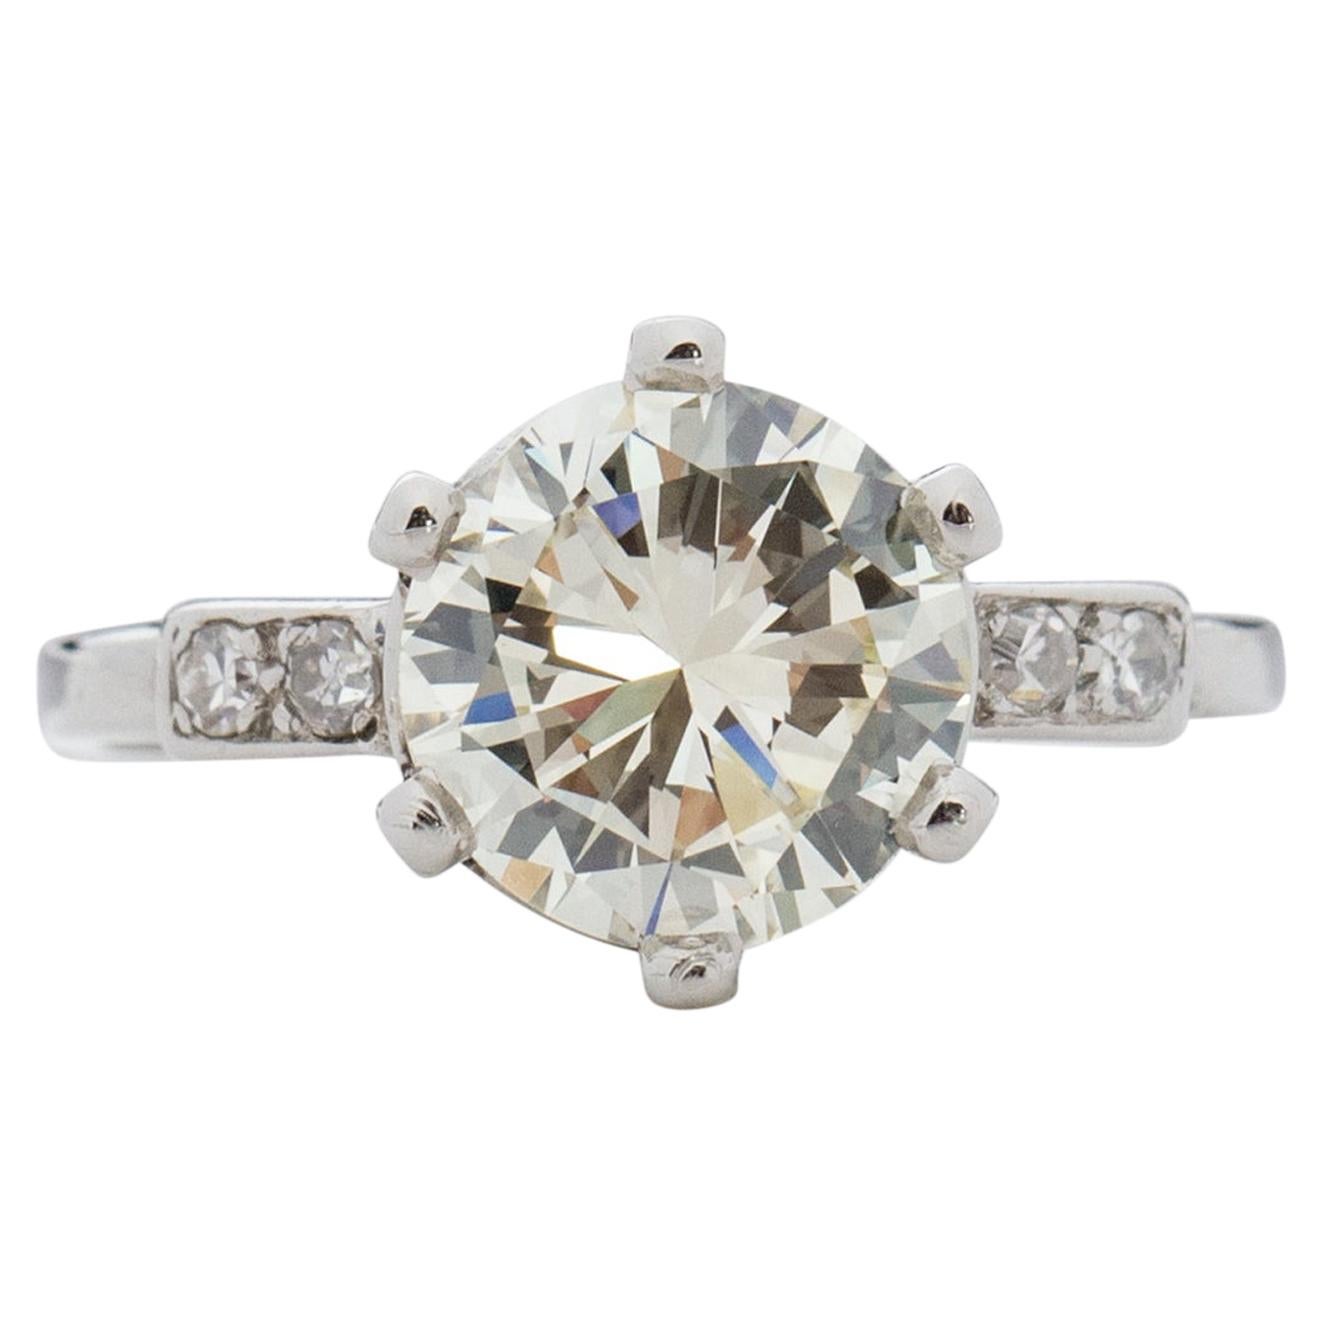 Late Art Deco GIA 2.0 Carat Transitional Cut Diamond Platinum Solitaire Ring